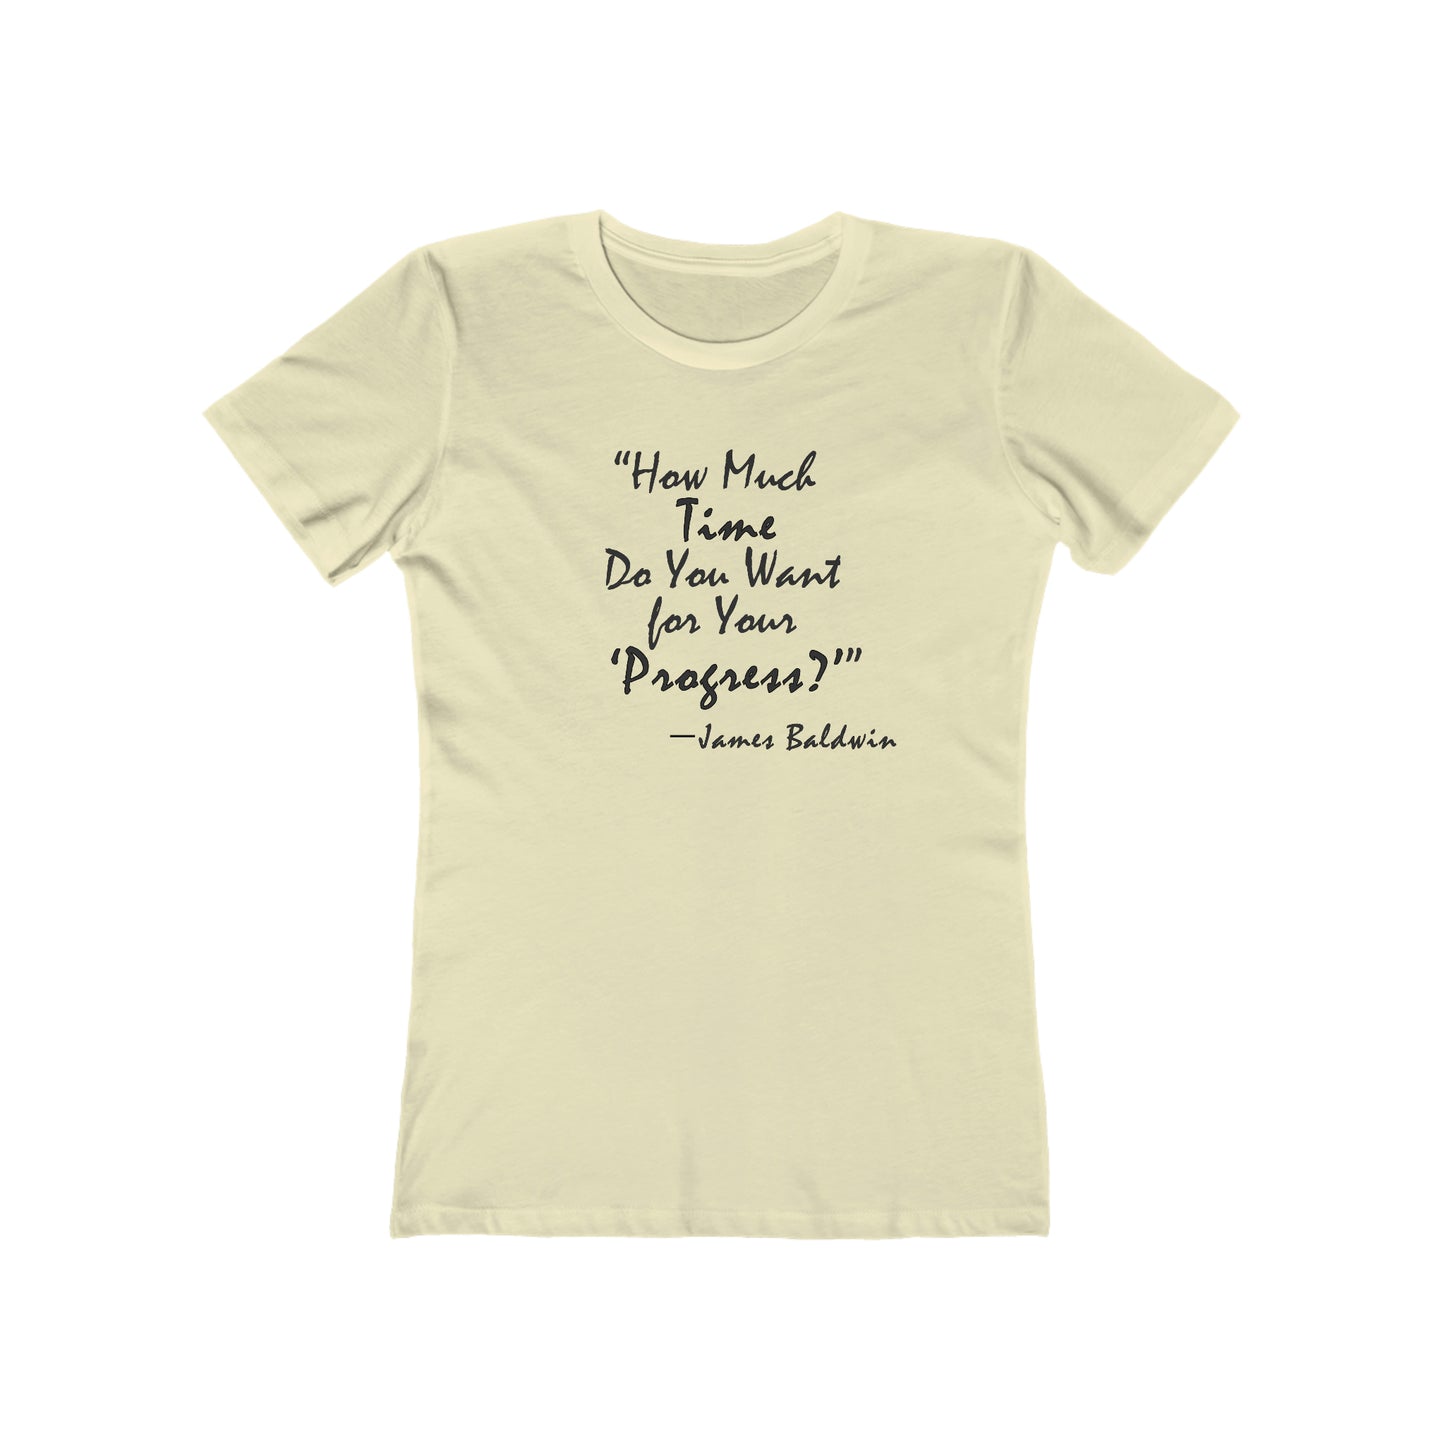 James Baldwin Quote - "Progress" - Women's T-Shirt